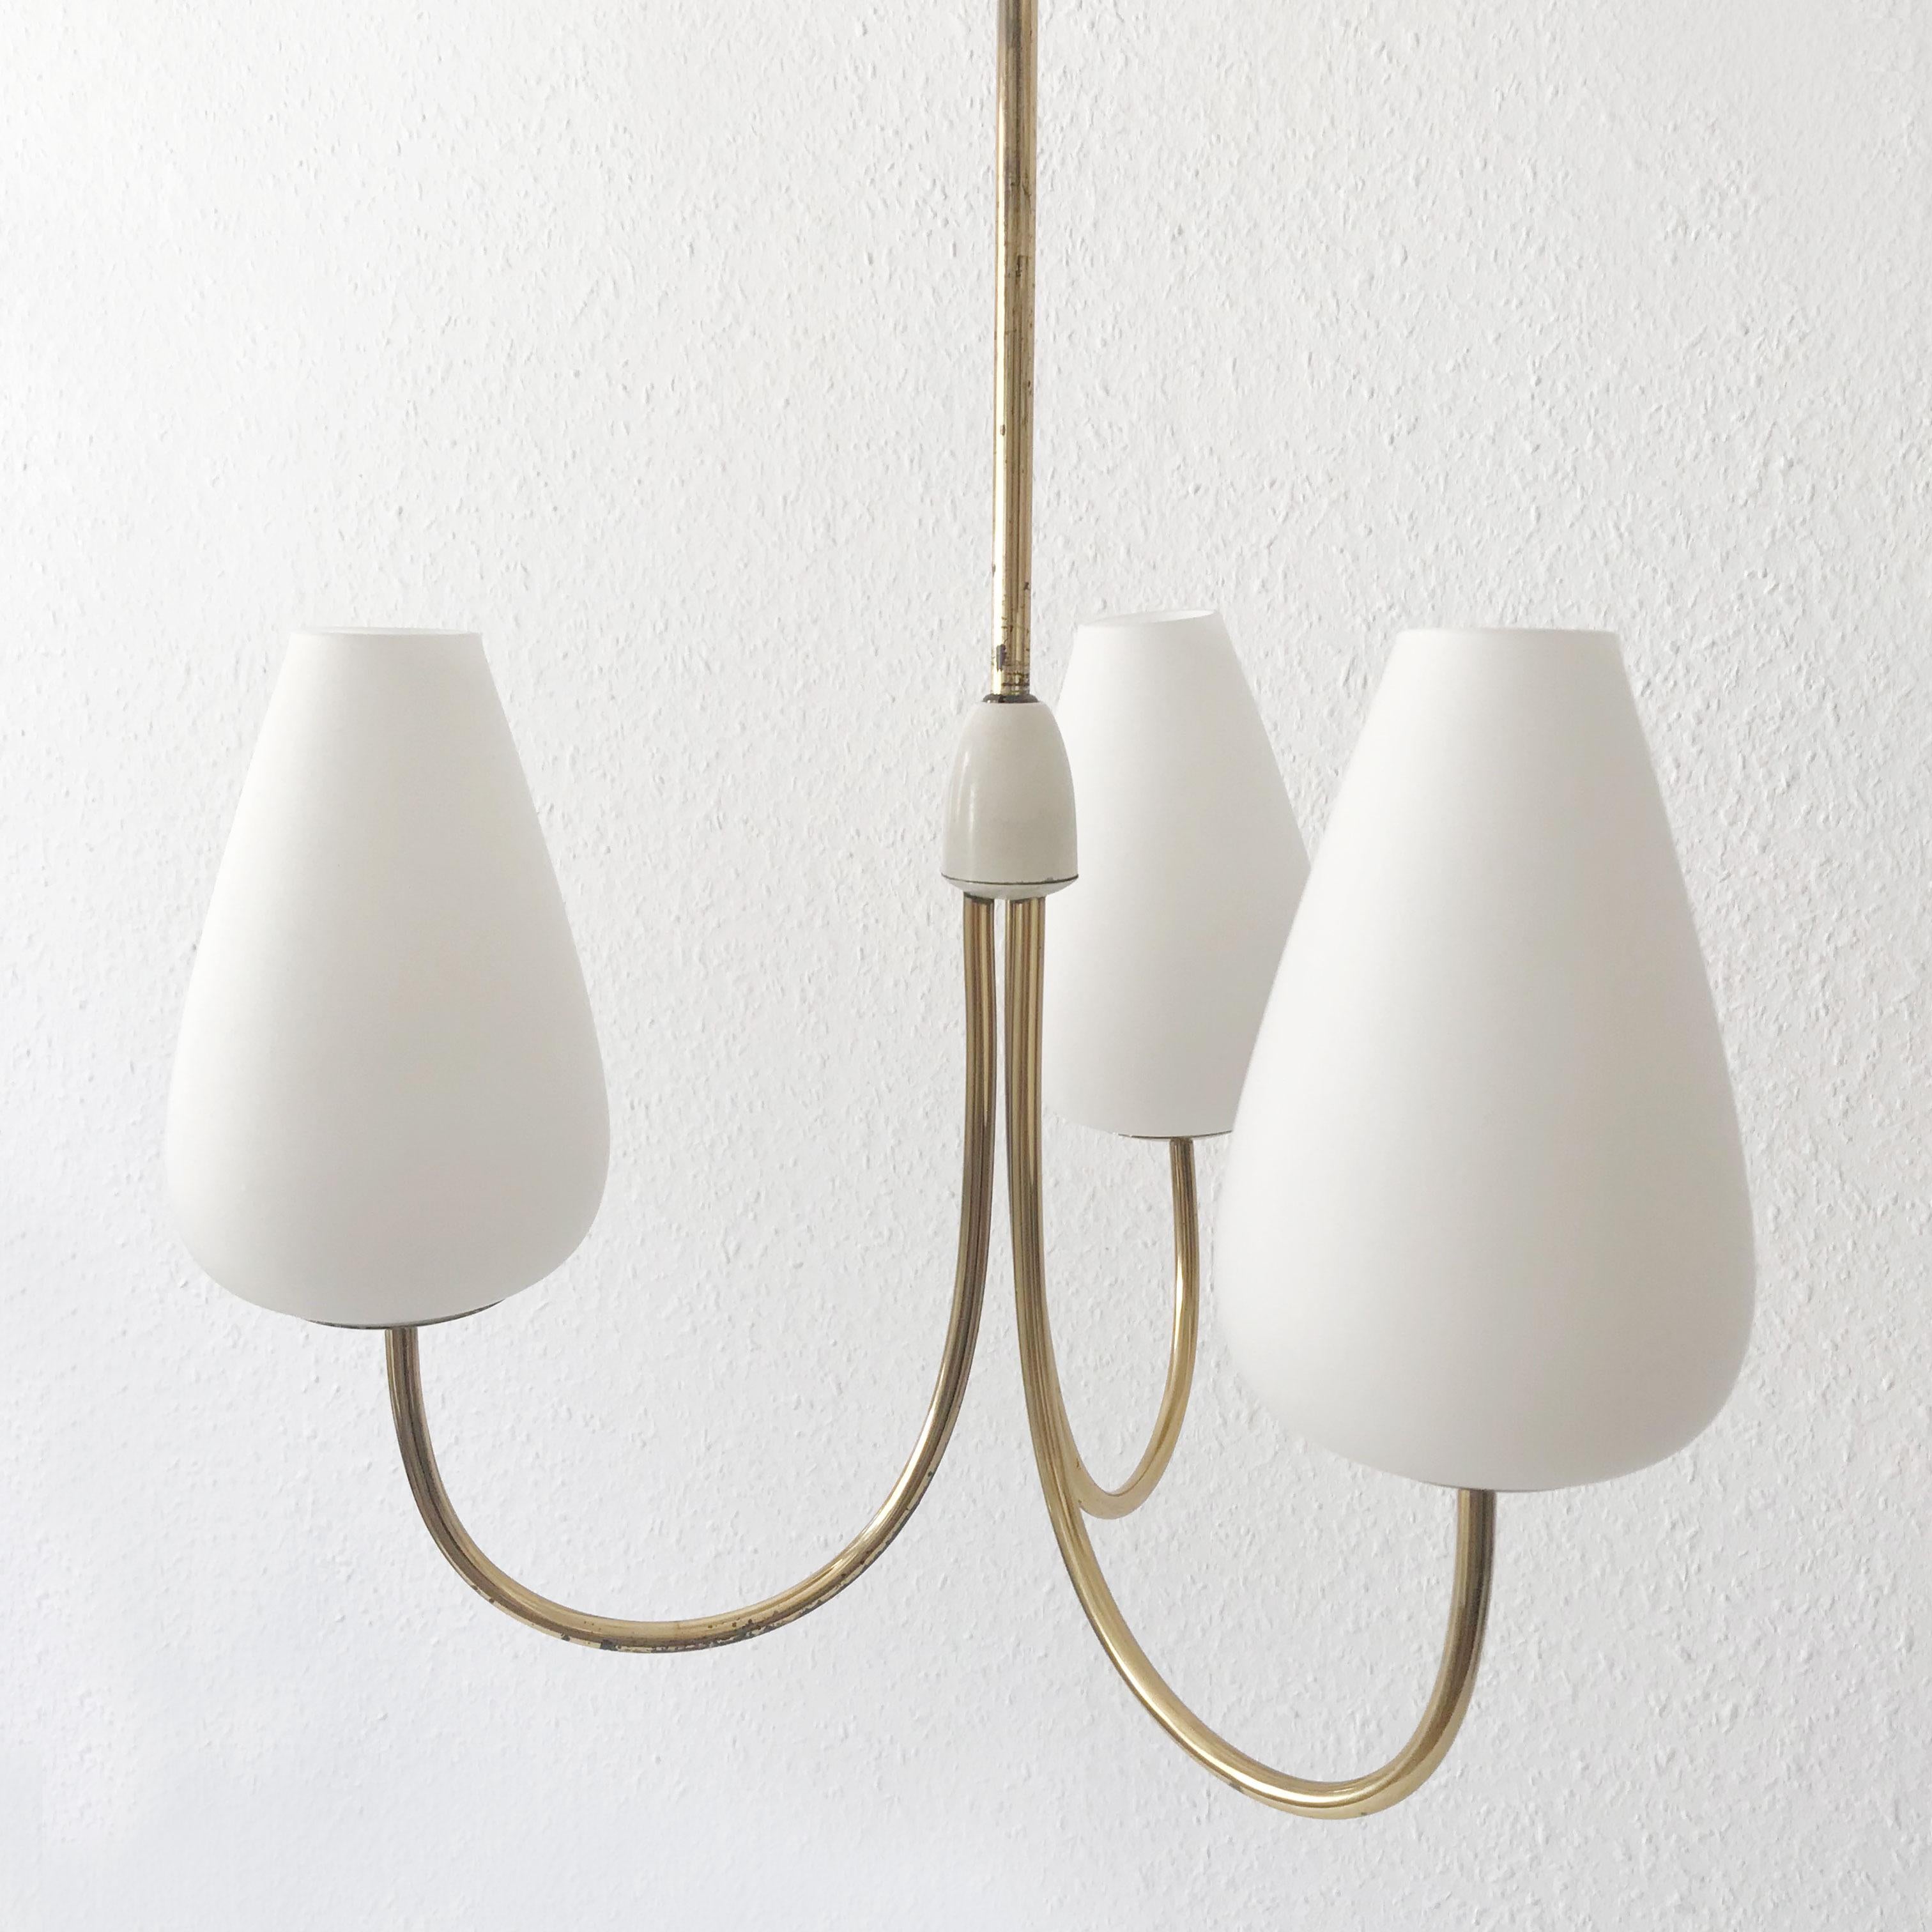 Brass Lovely Mid-Century Modern Chandelier or Pendant Lamp, 1950s, Germany